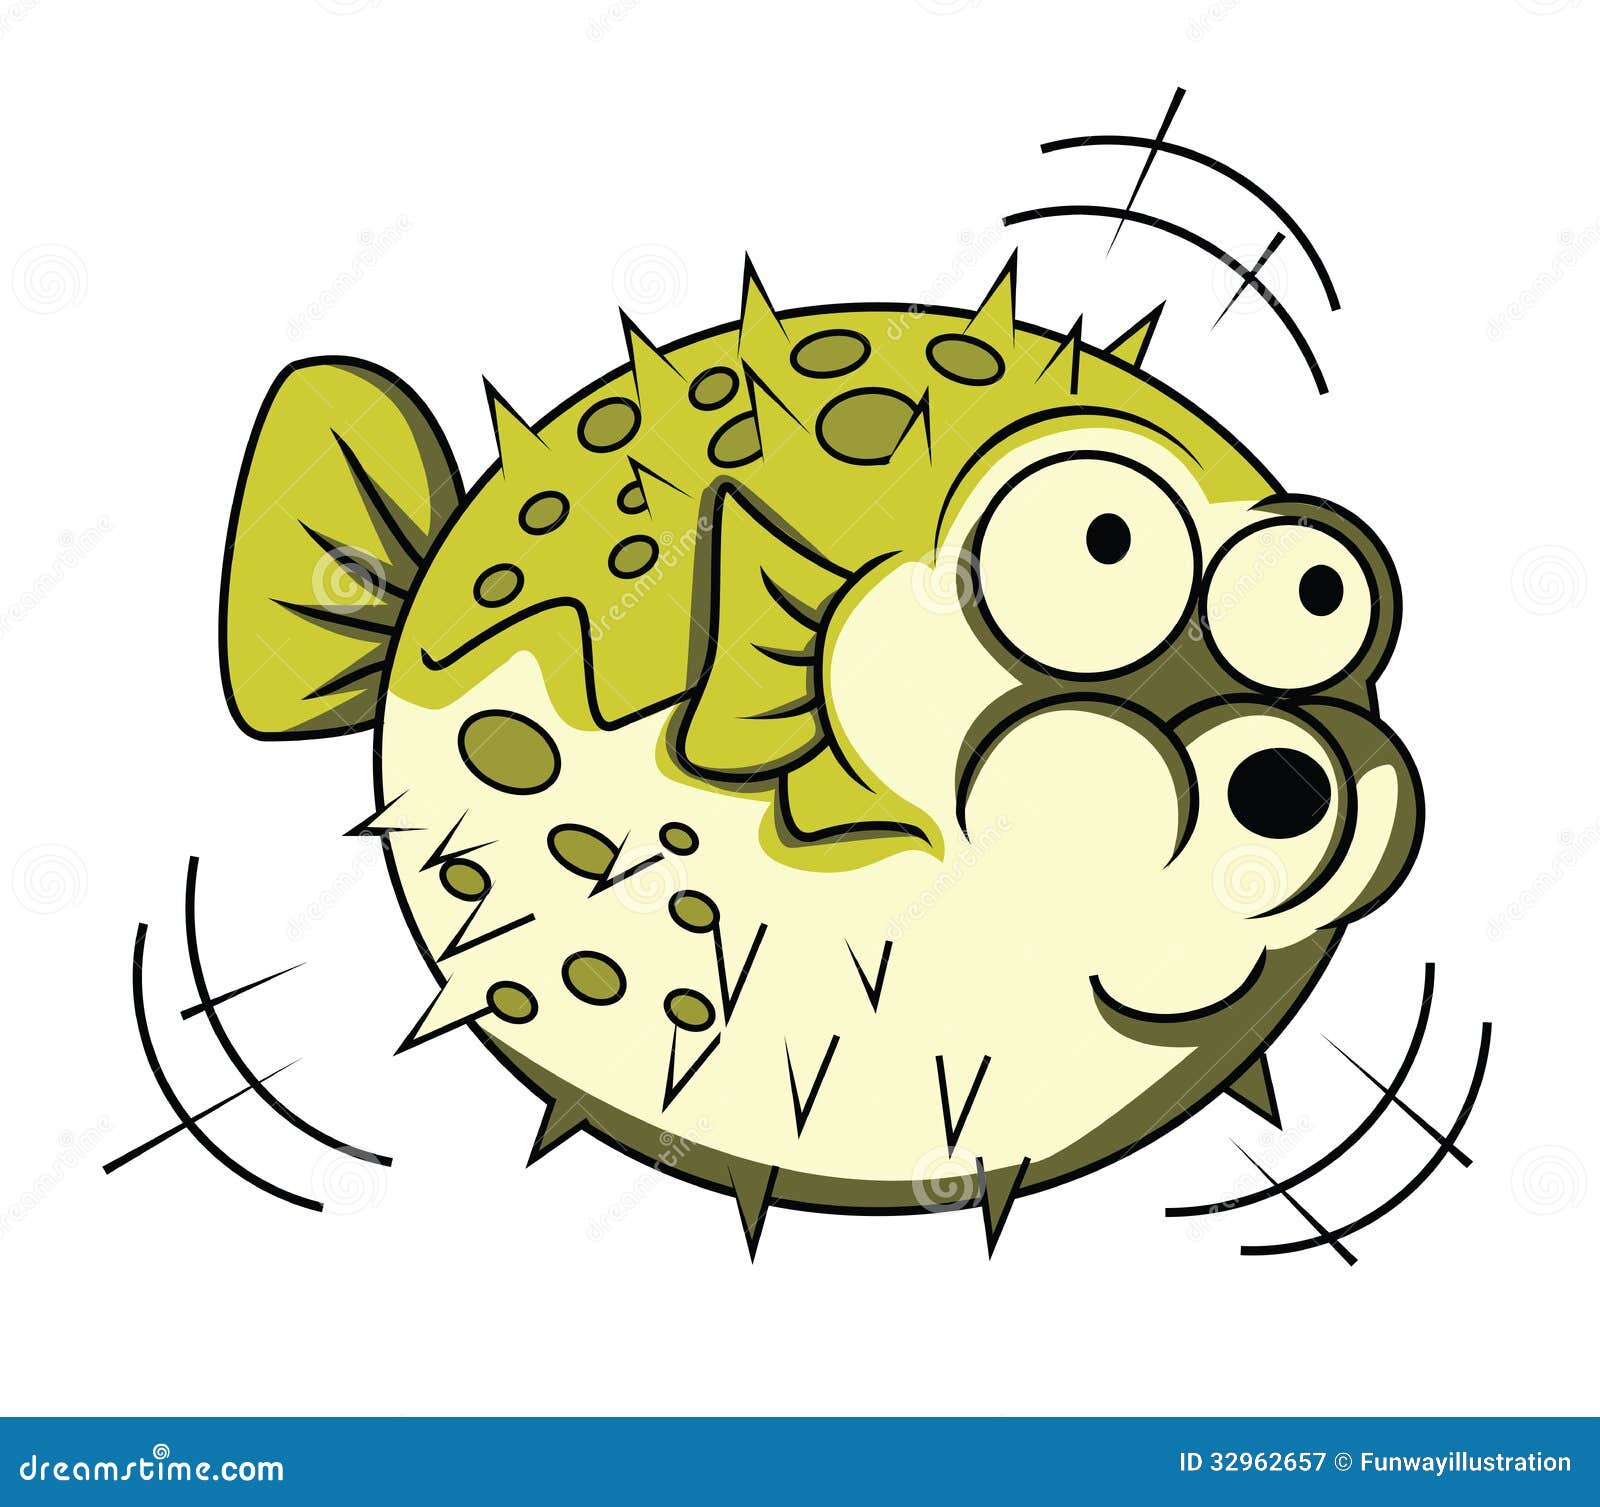 Puffer fish stock illustration. Illustration of clipart - 32962657